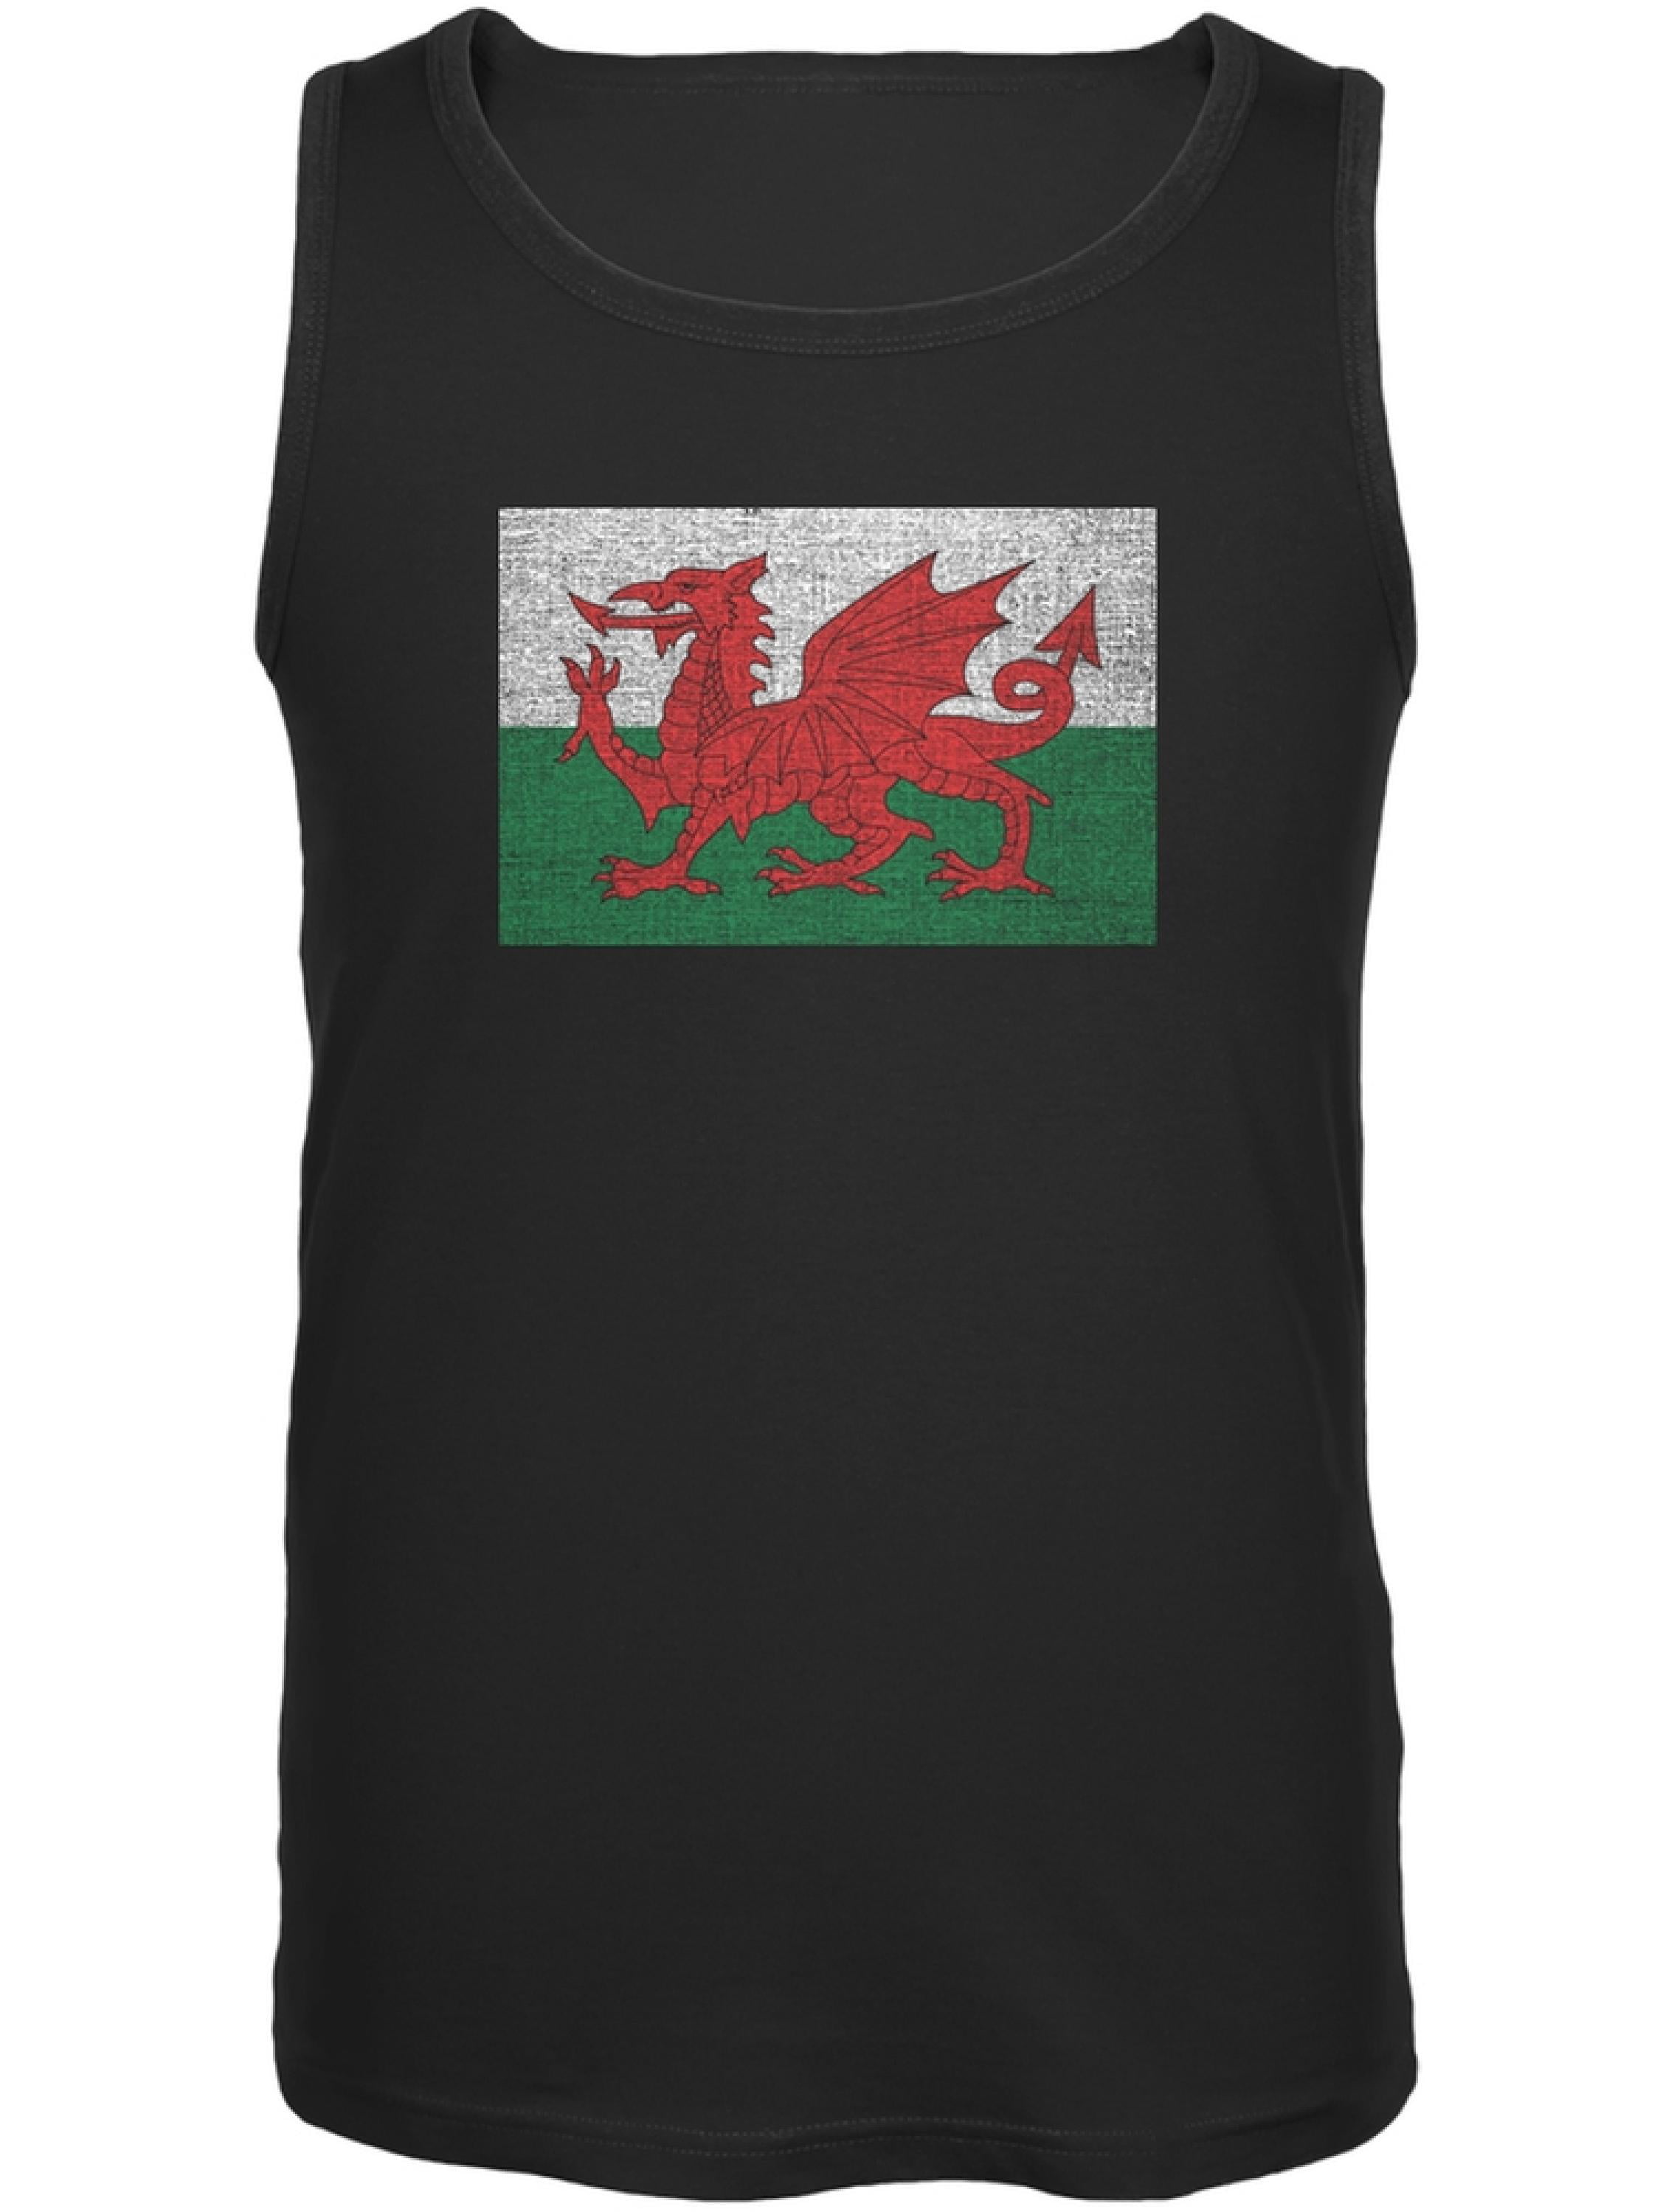 Welsh Flag Distressed Black Adult Long Sleeve T-Shirt 